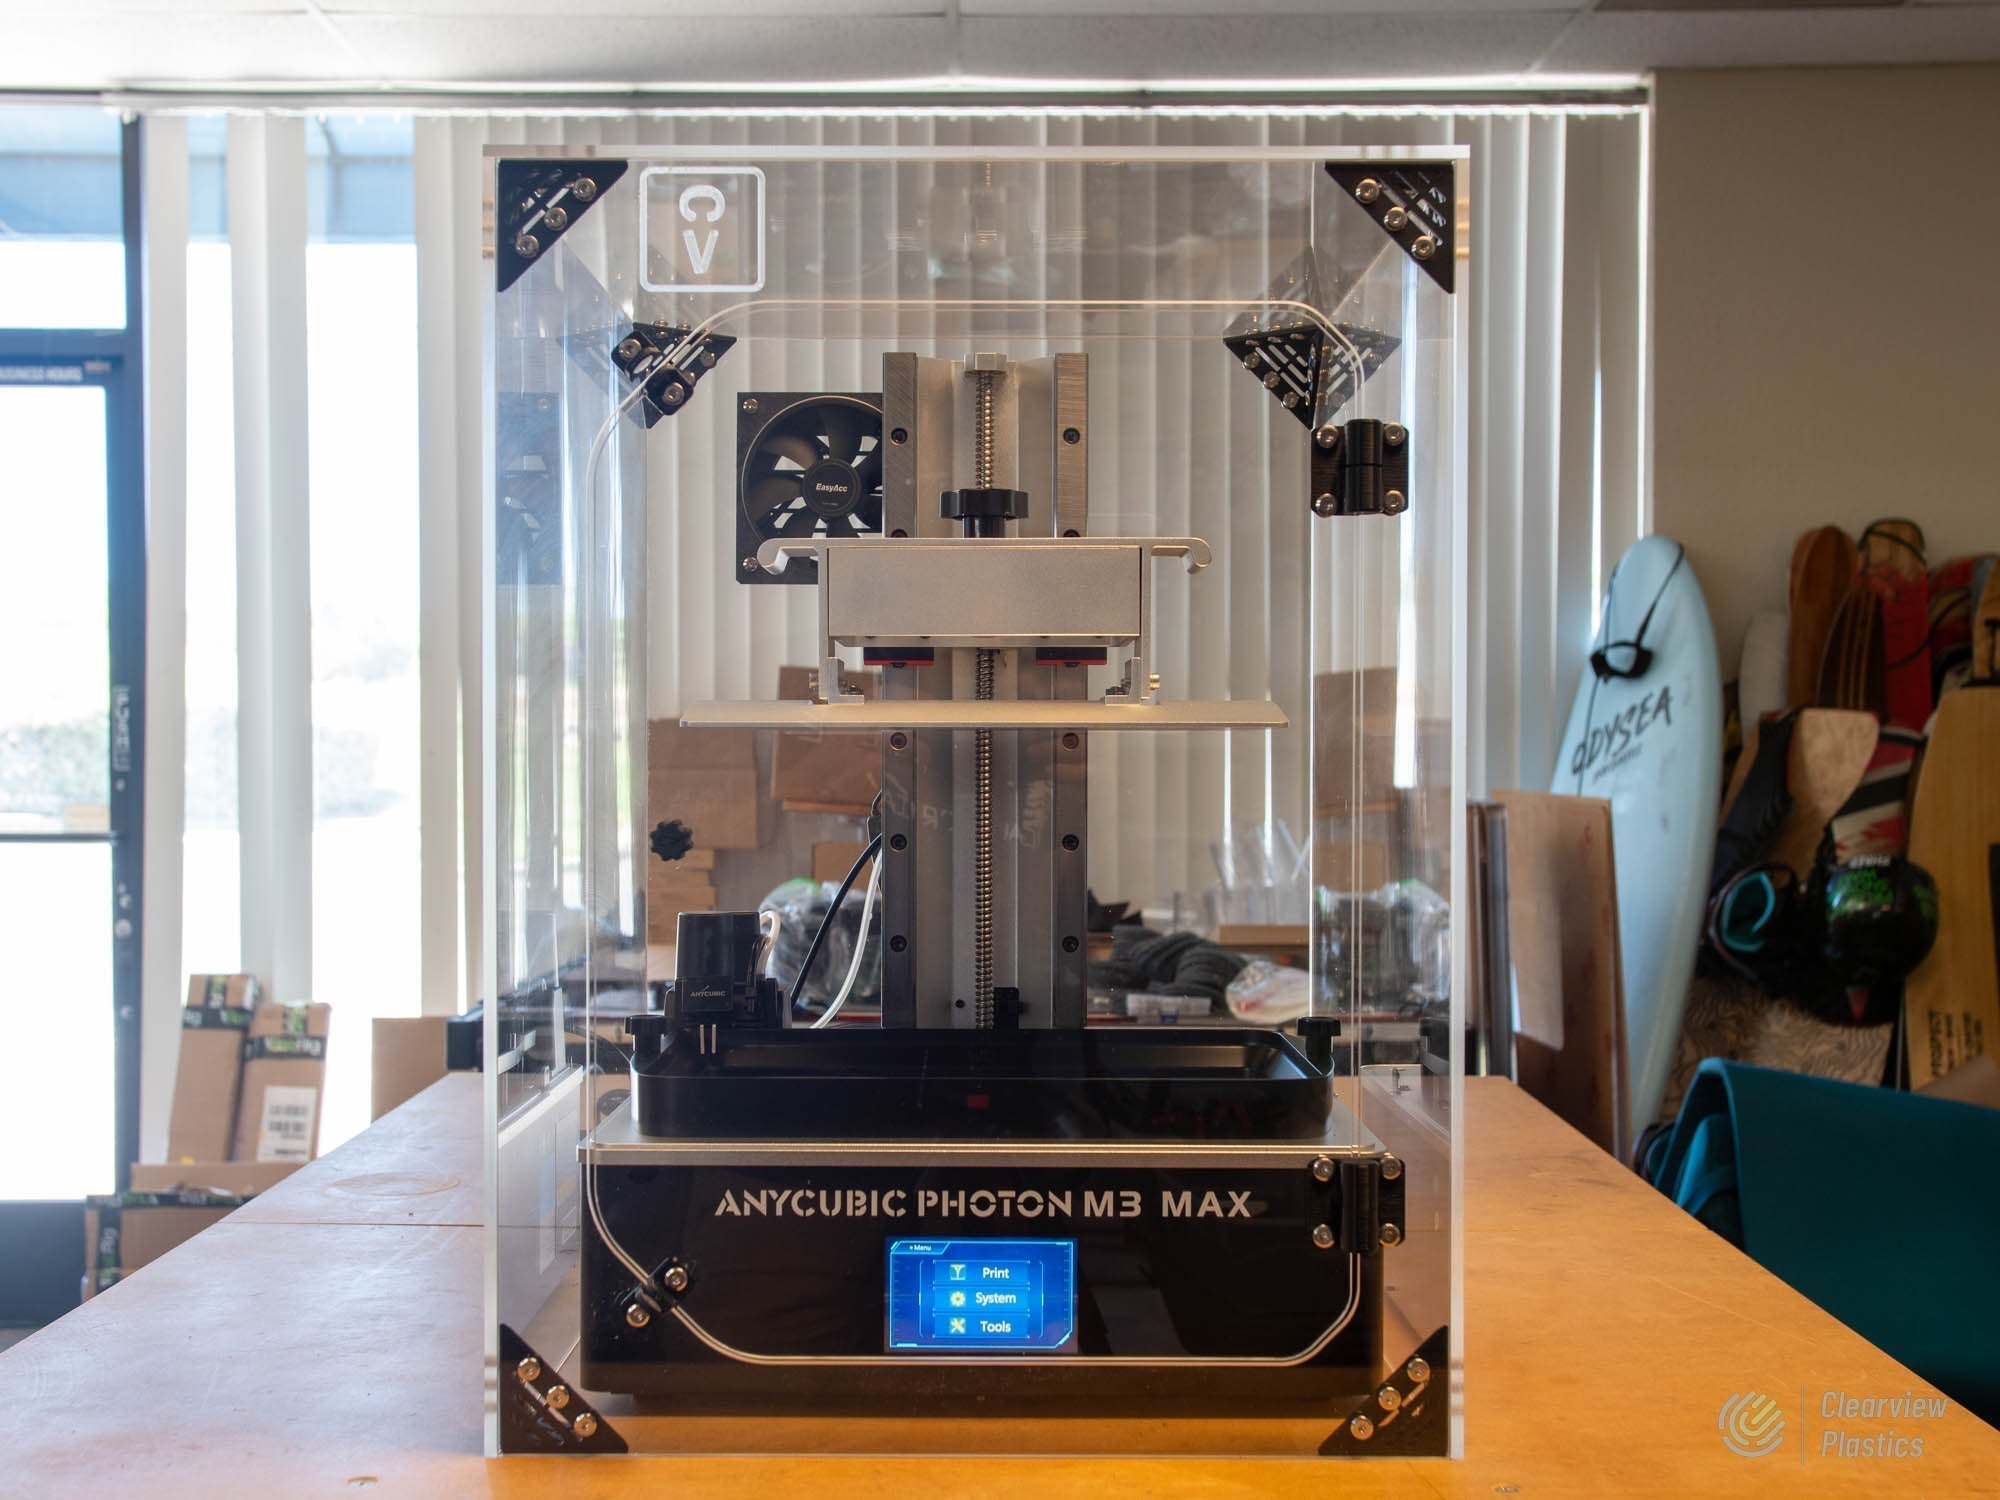 Elegoo Mars Ultra SLA Resin 3D Printer Enclosure V2.0